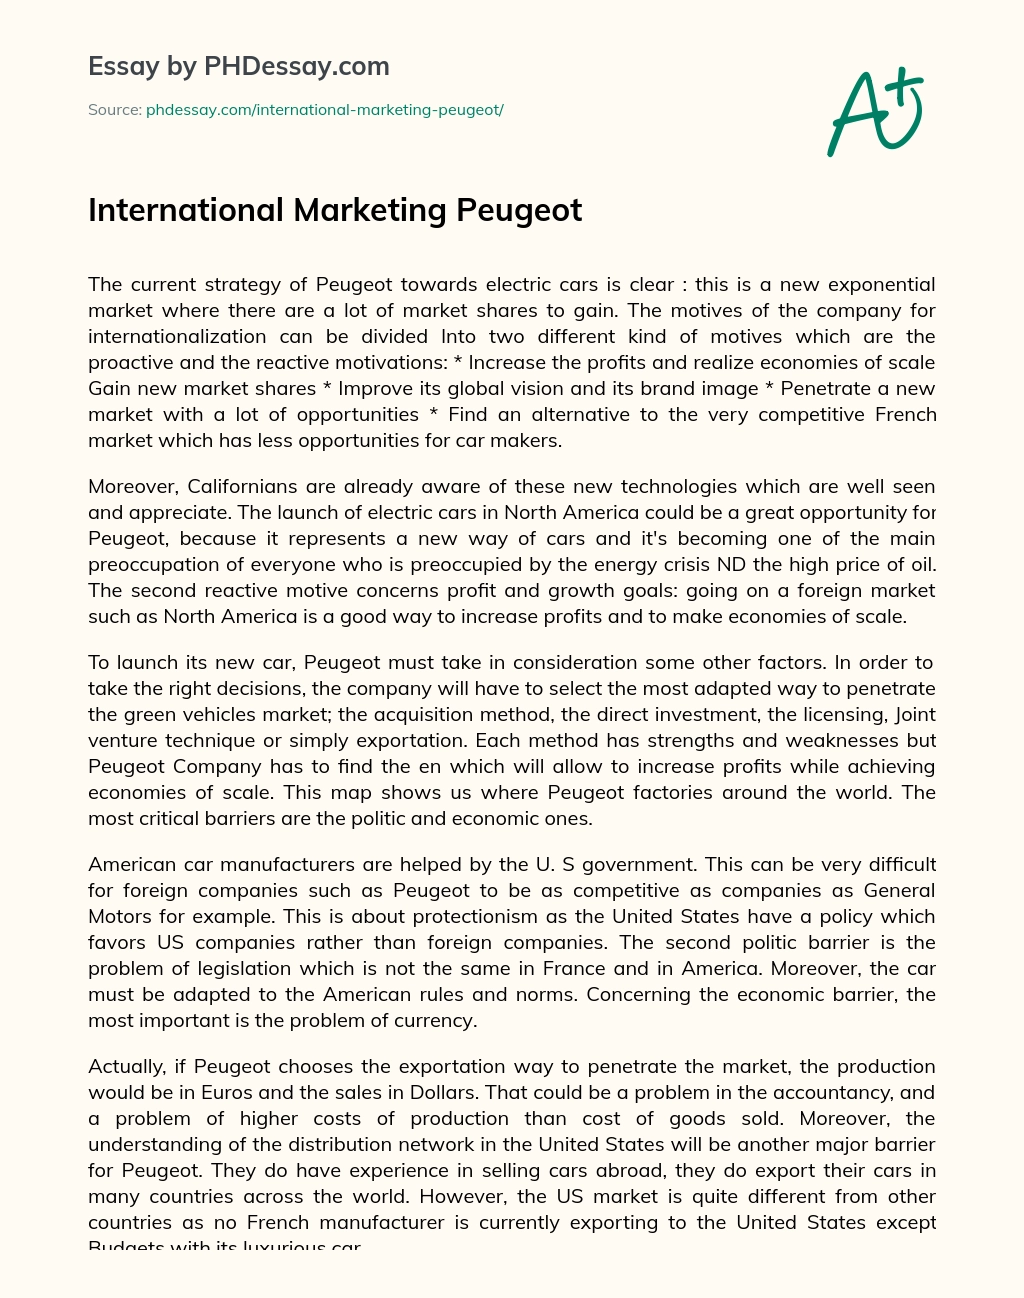 International Marketing Peugeot essay